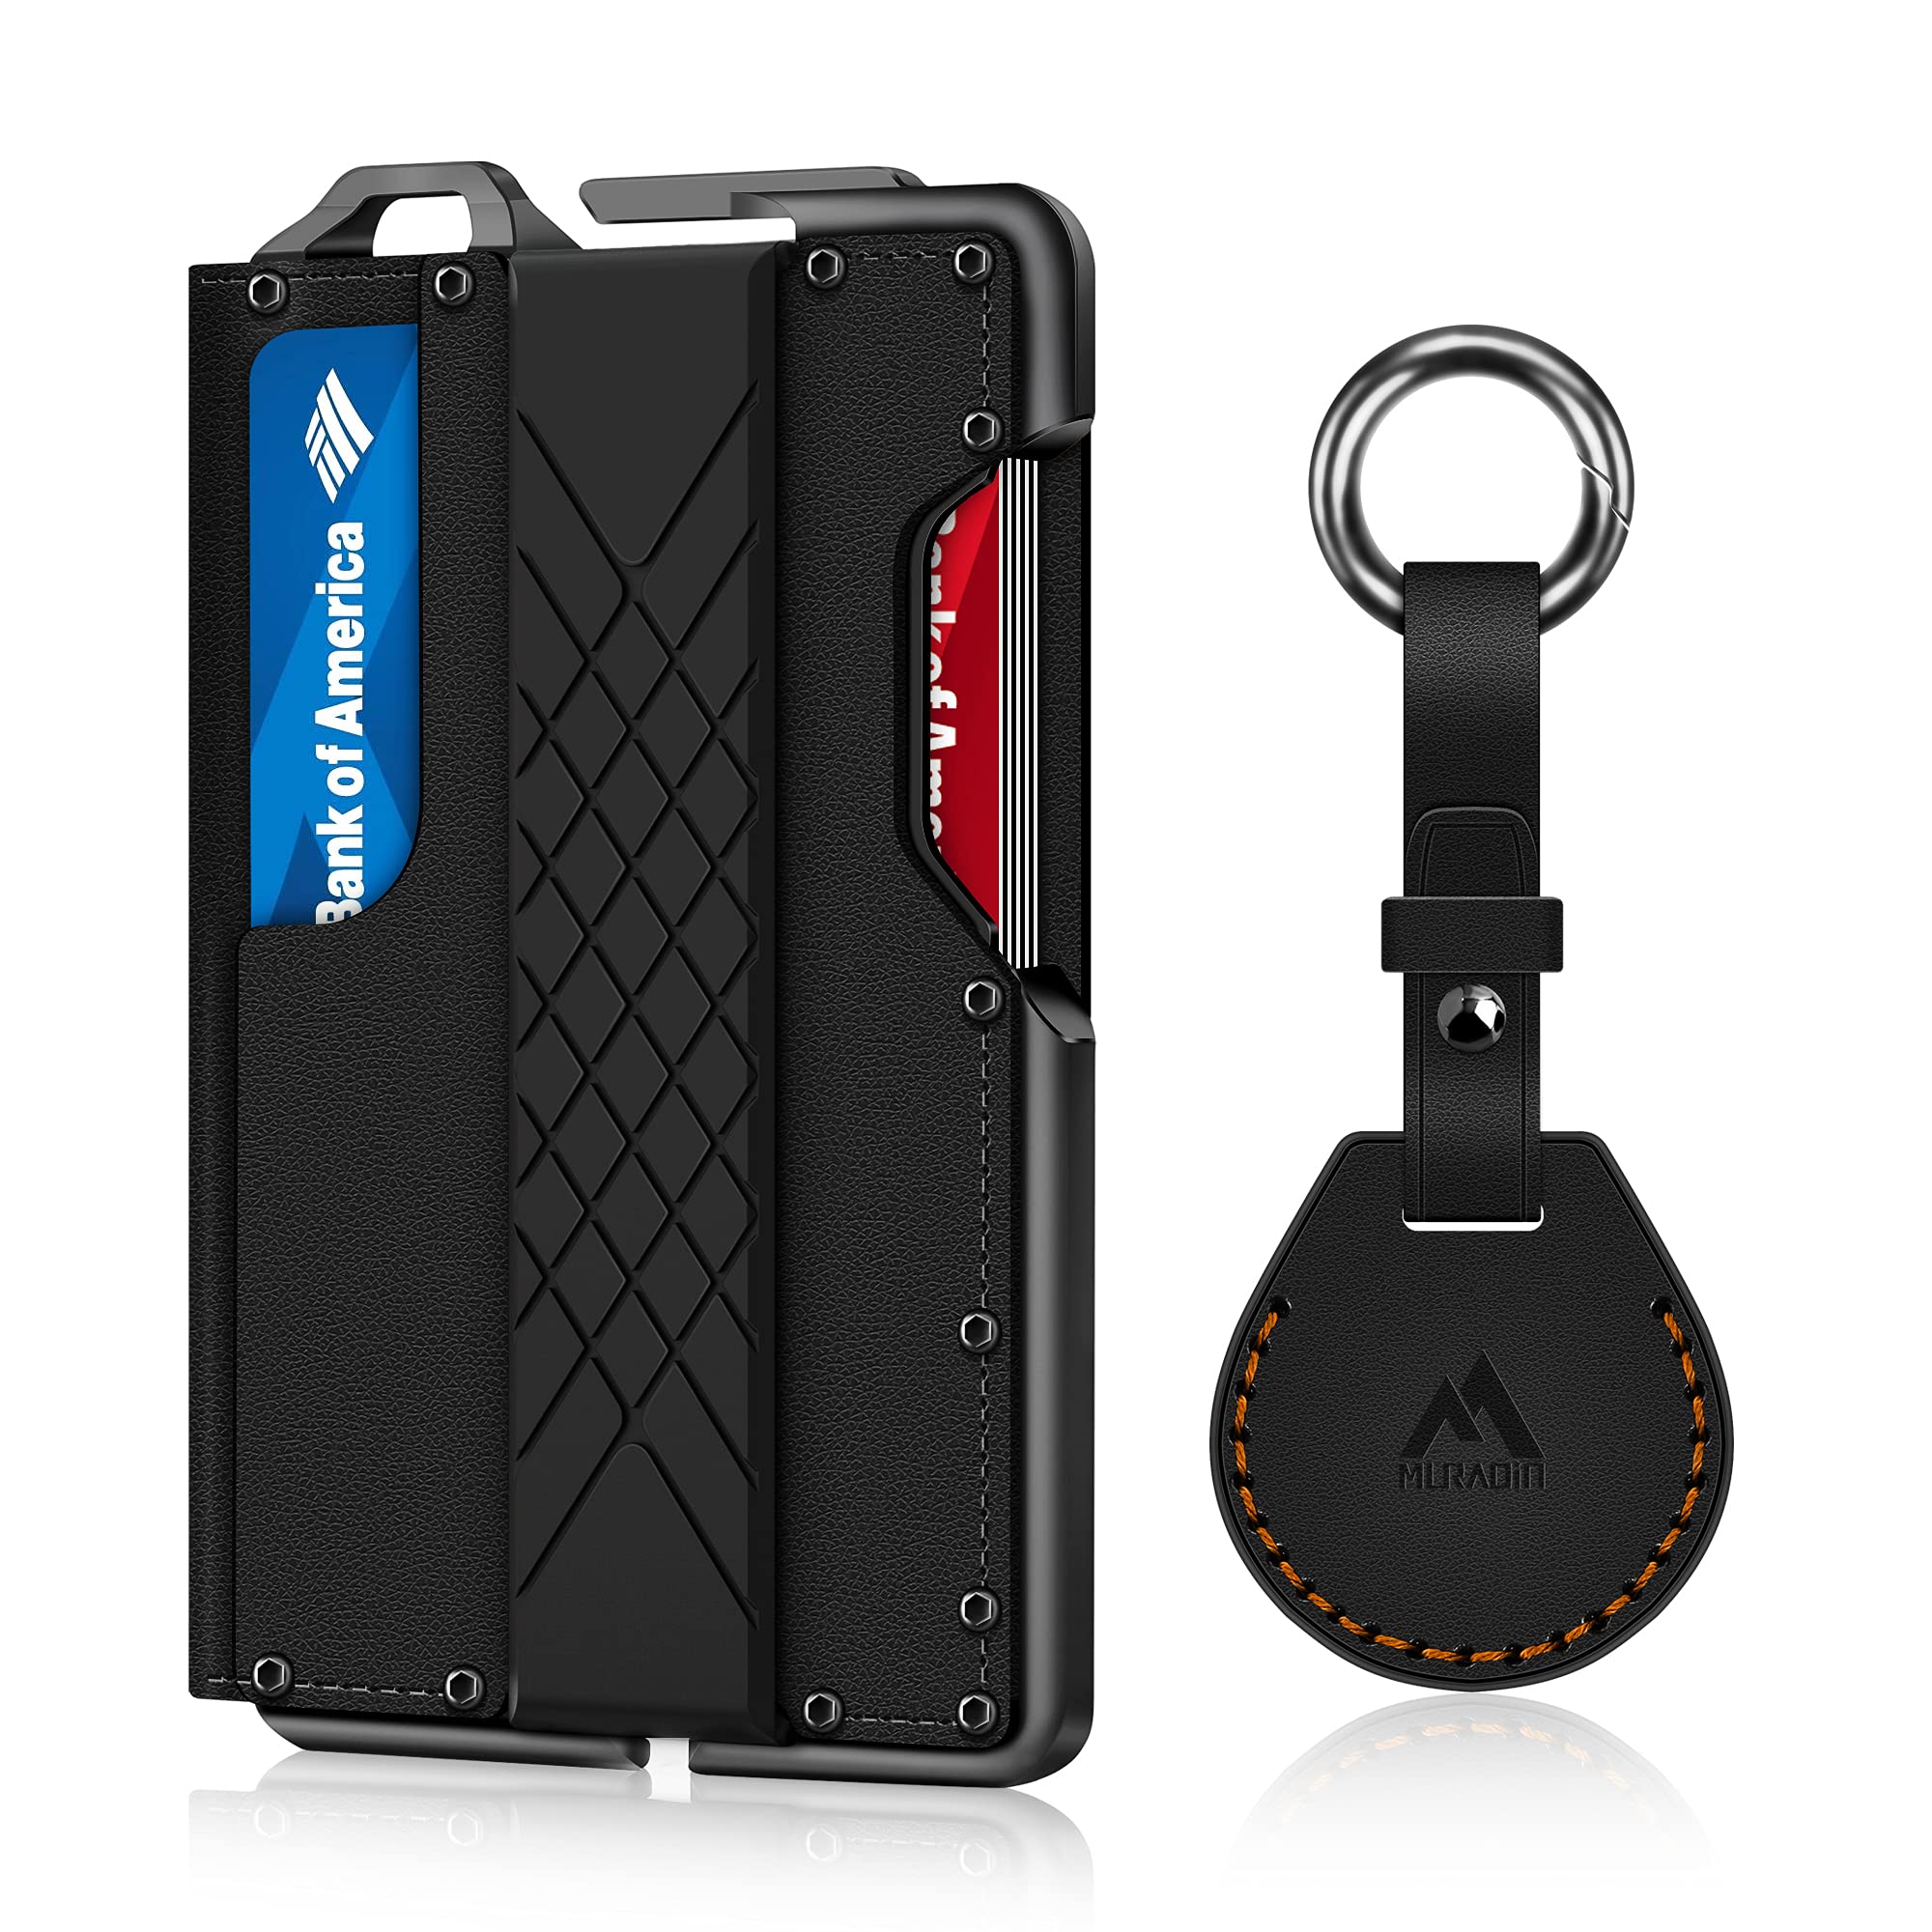 Rustico KT-AC0121-0003-LI Leather Keychain Wallet in Black